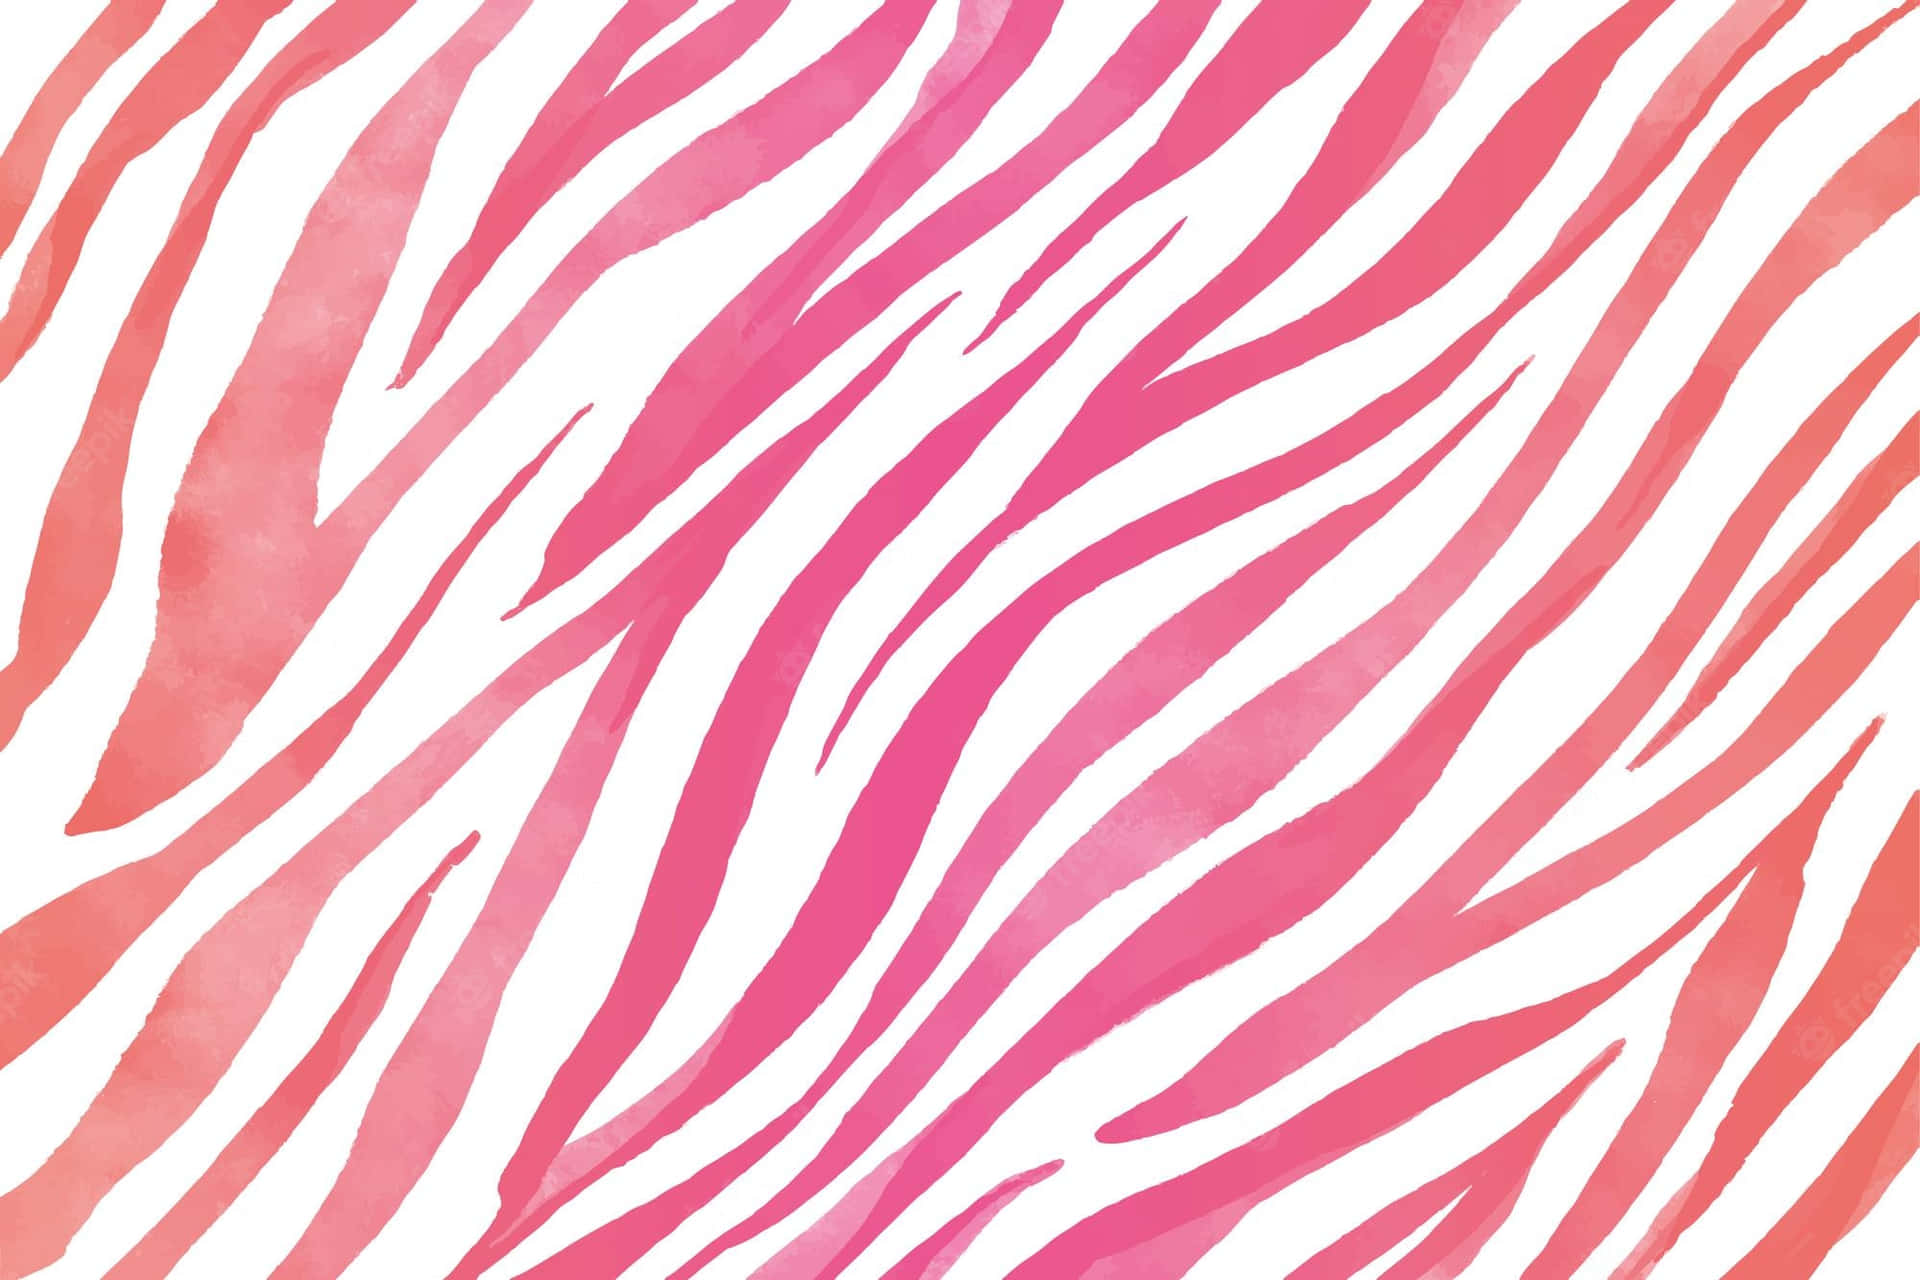 Orange And Pink Zebra Print Pattern Wallpaper